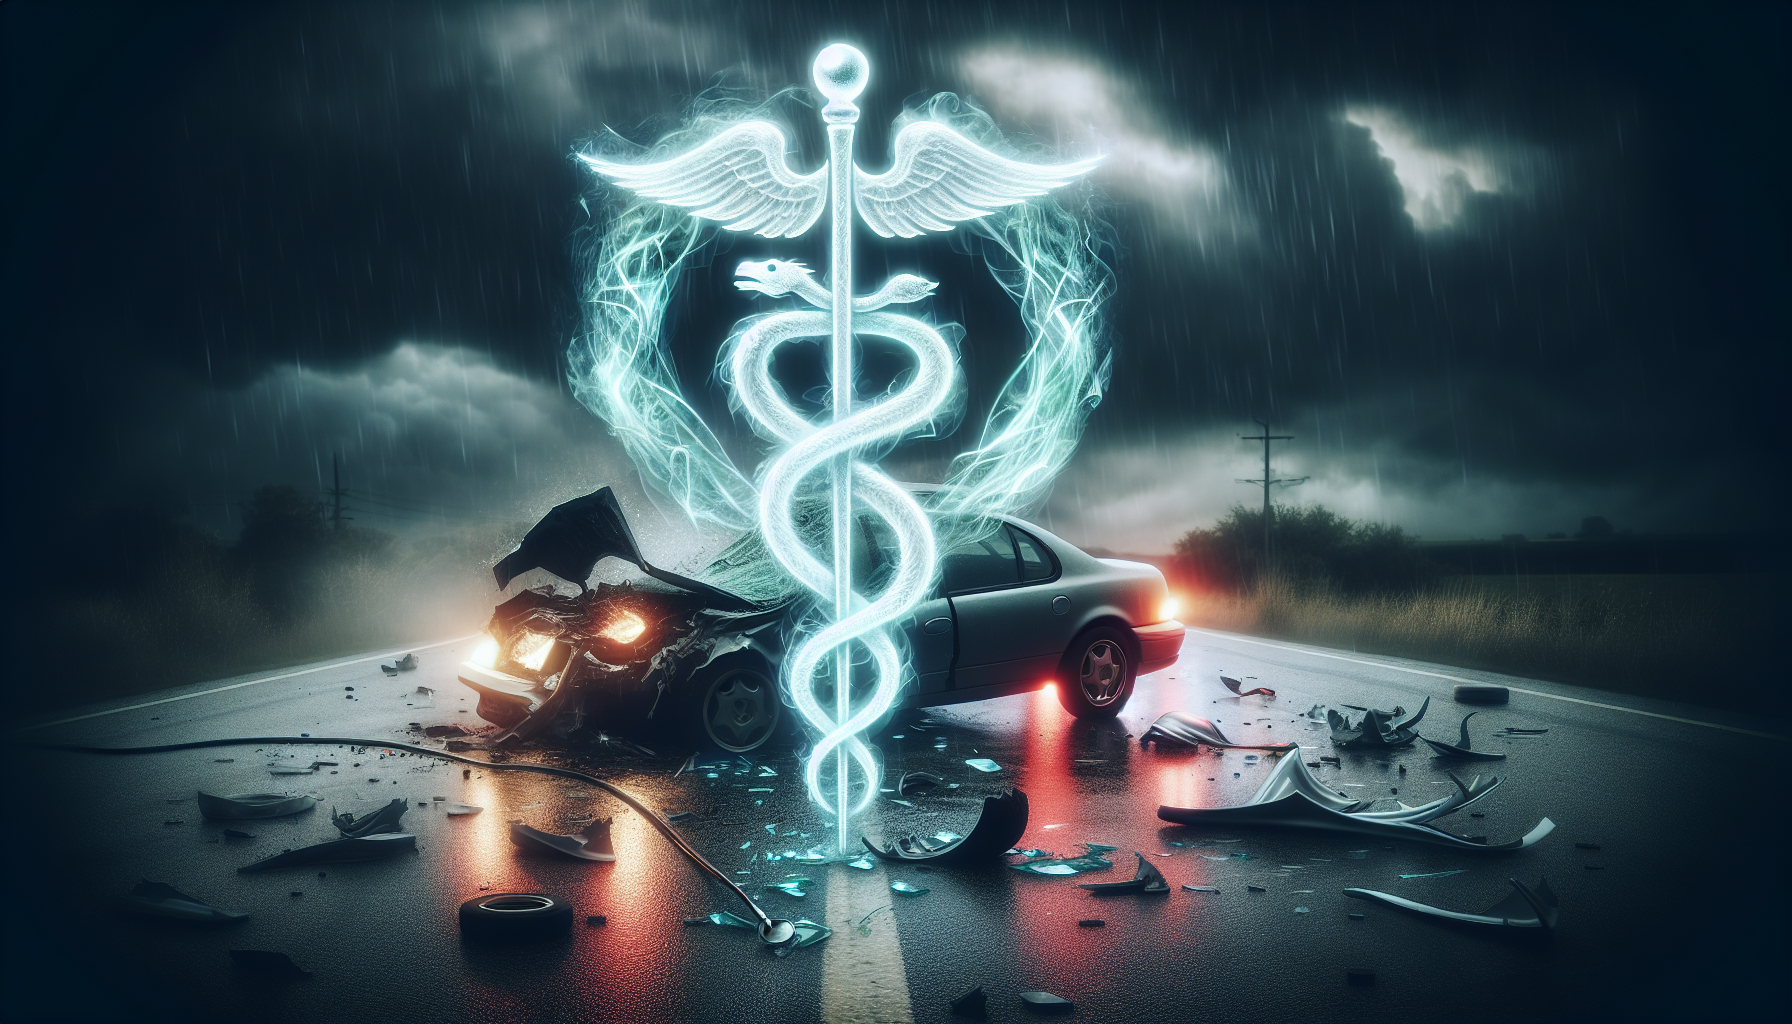 Illustration of car crash and medical symbol